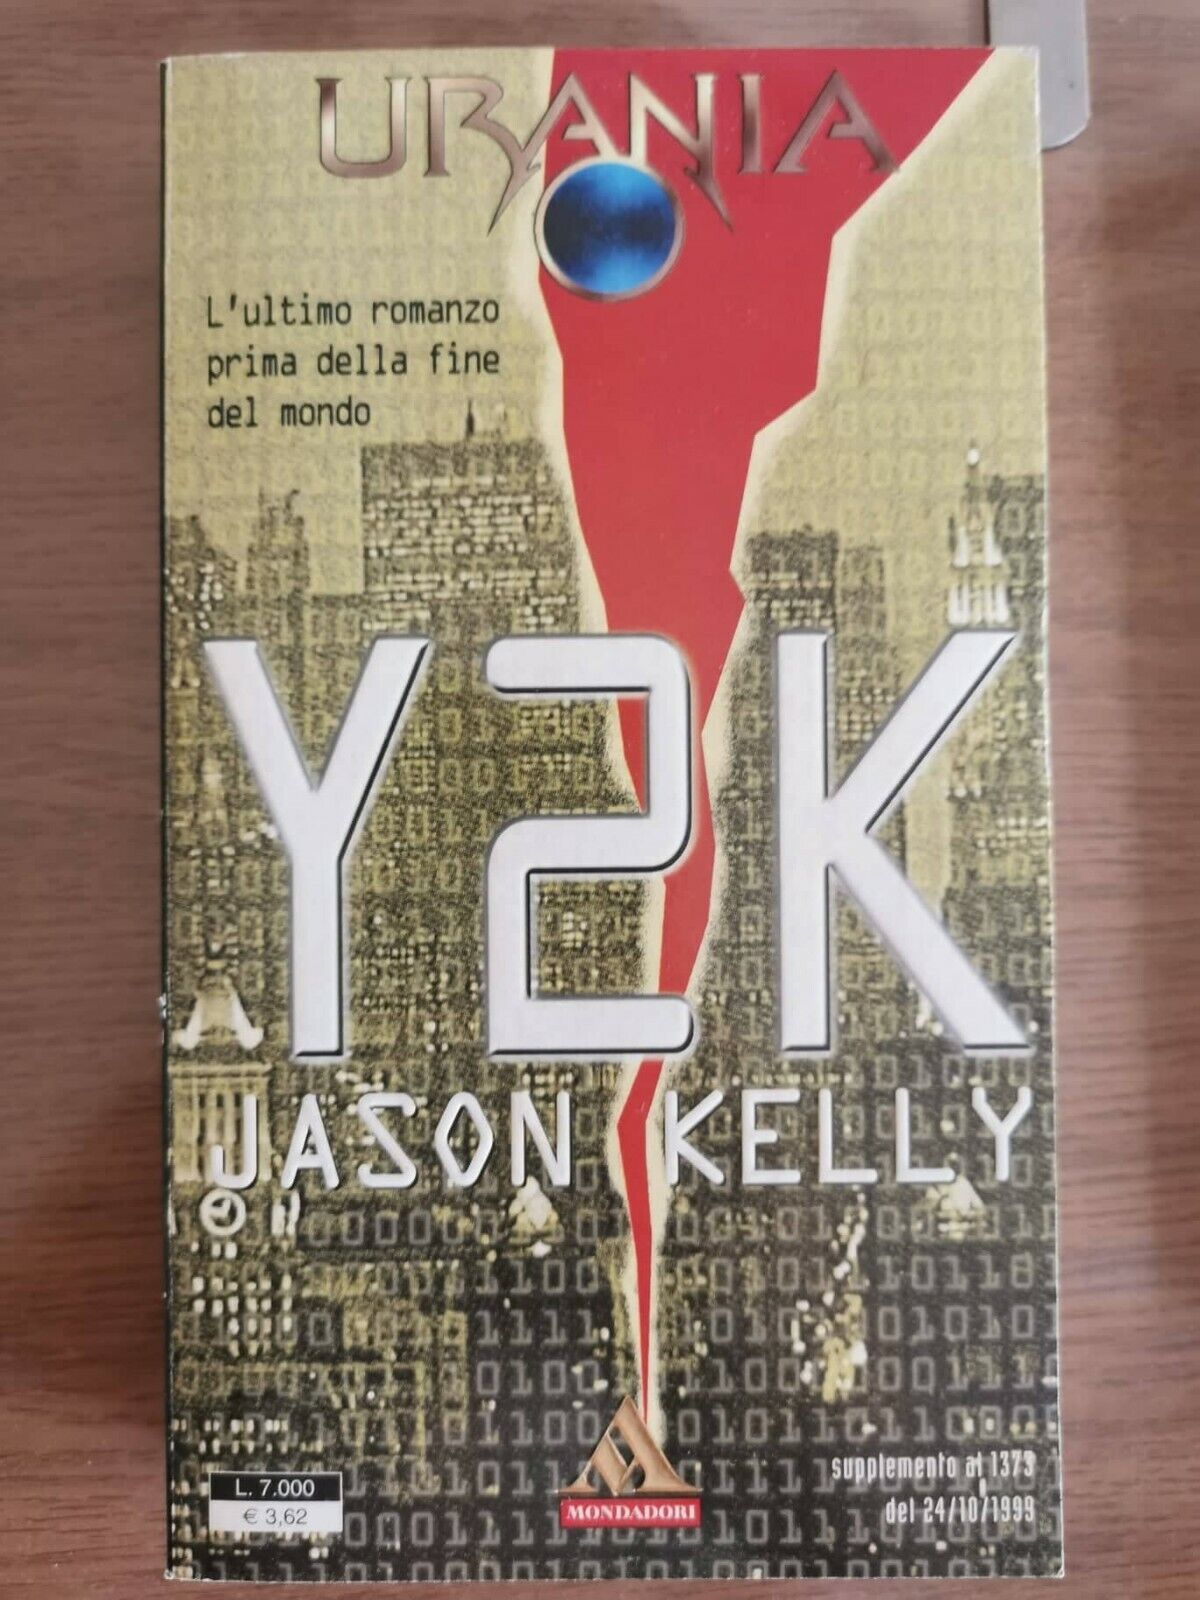 Y2K - J. Kelly - Mondadori - 1999 - AR